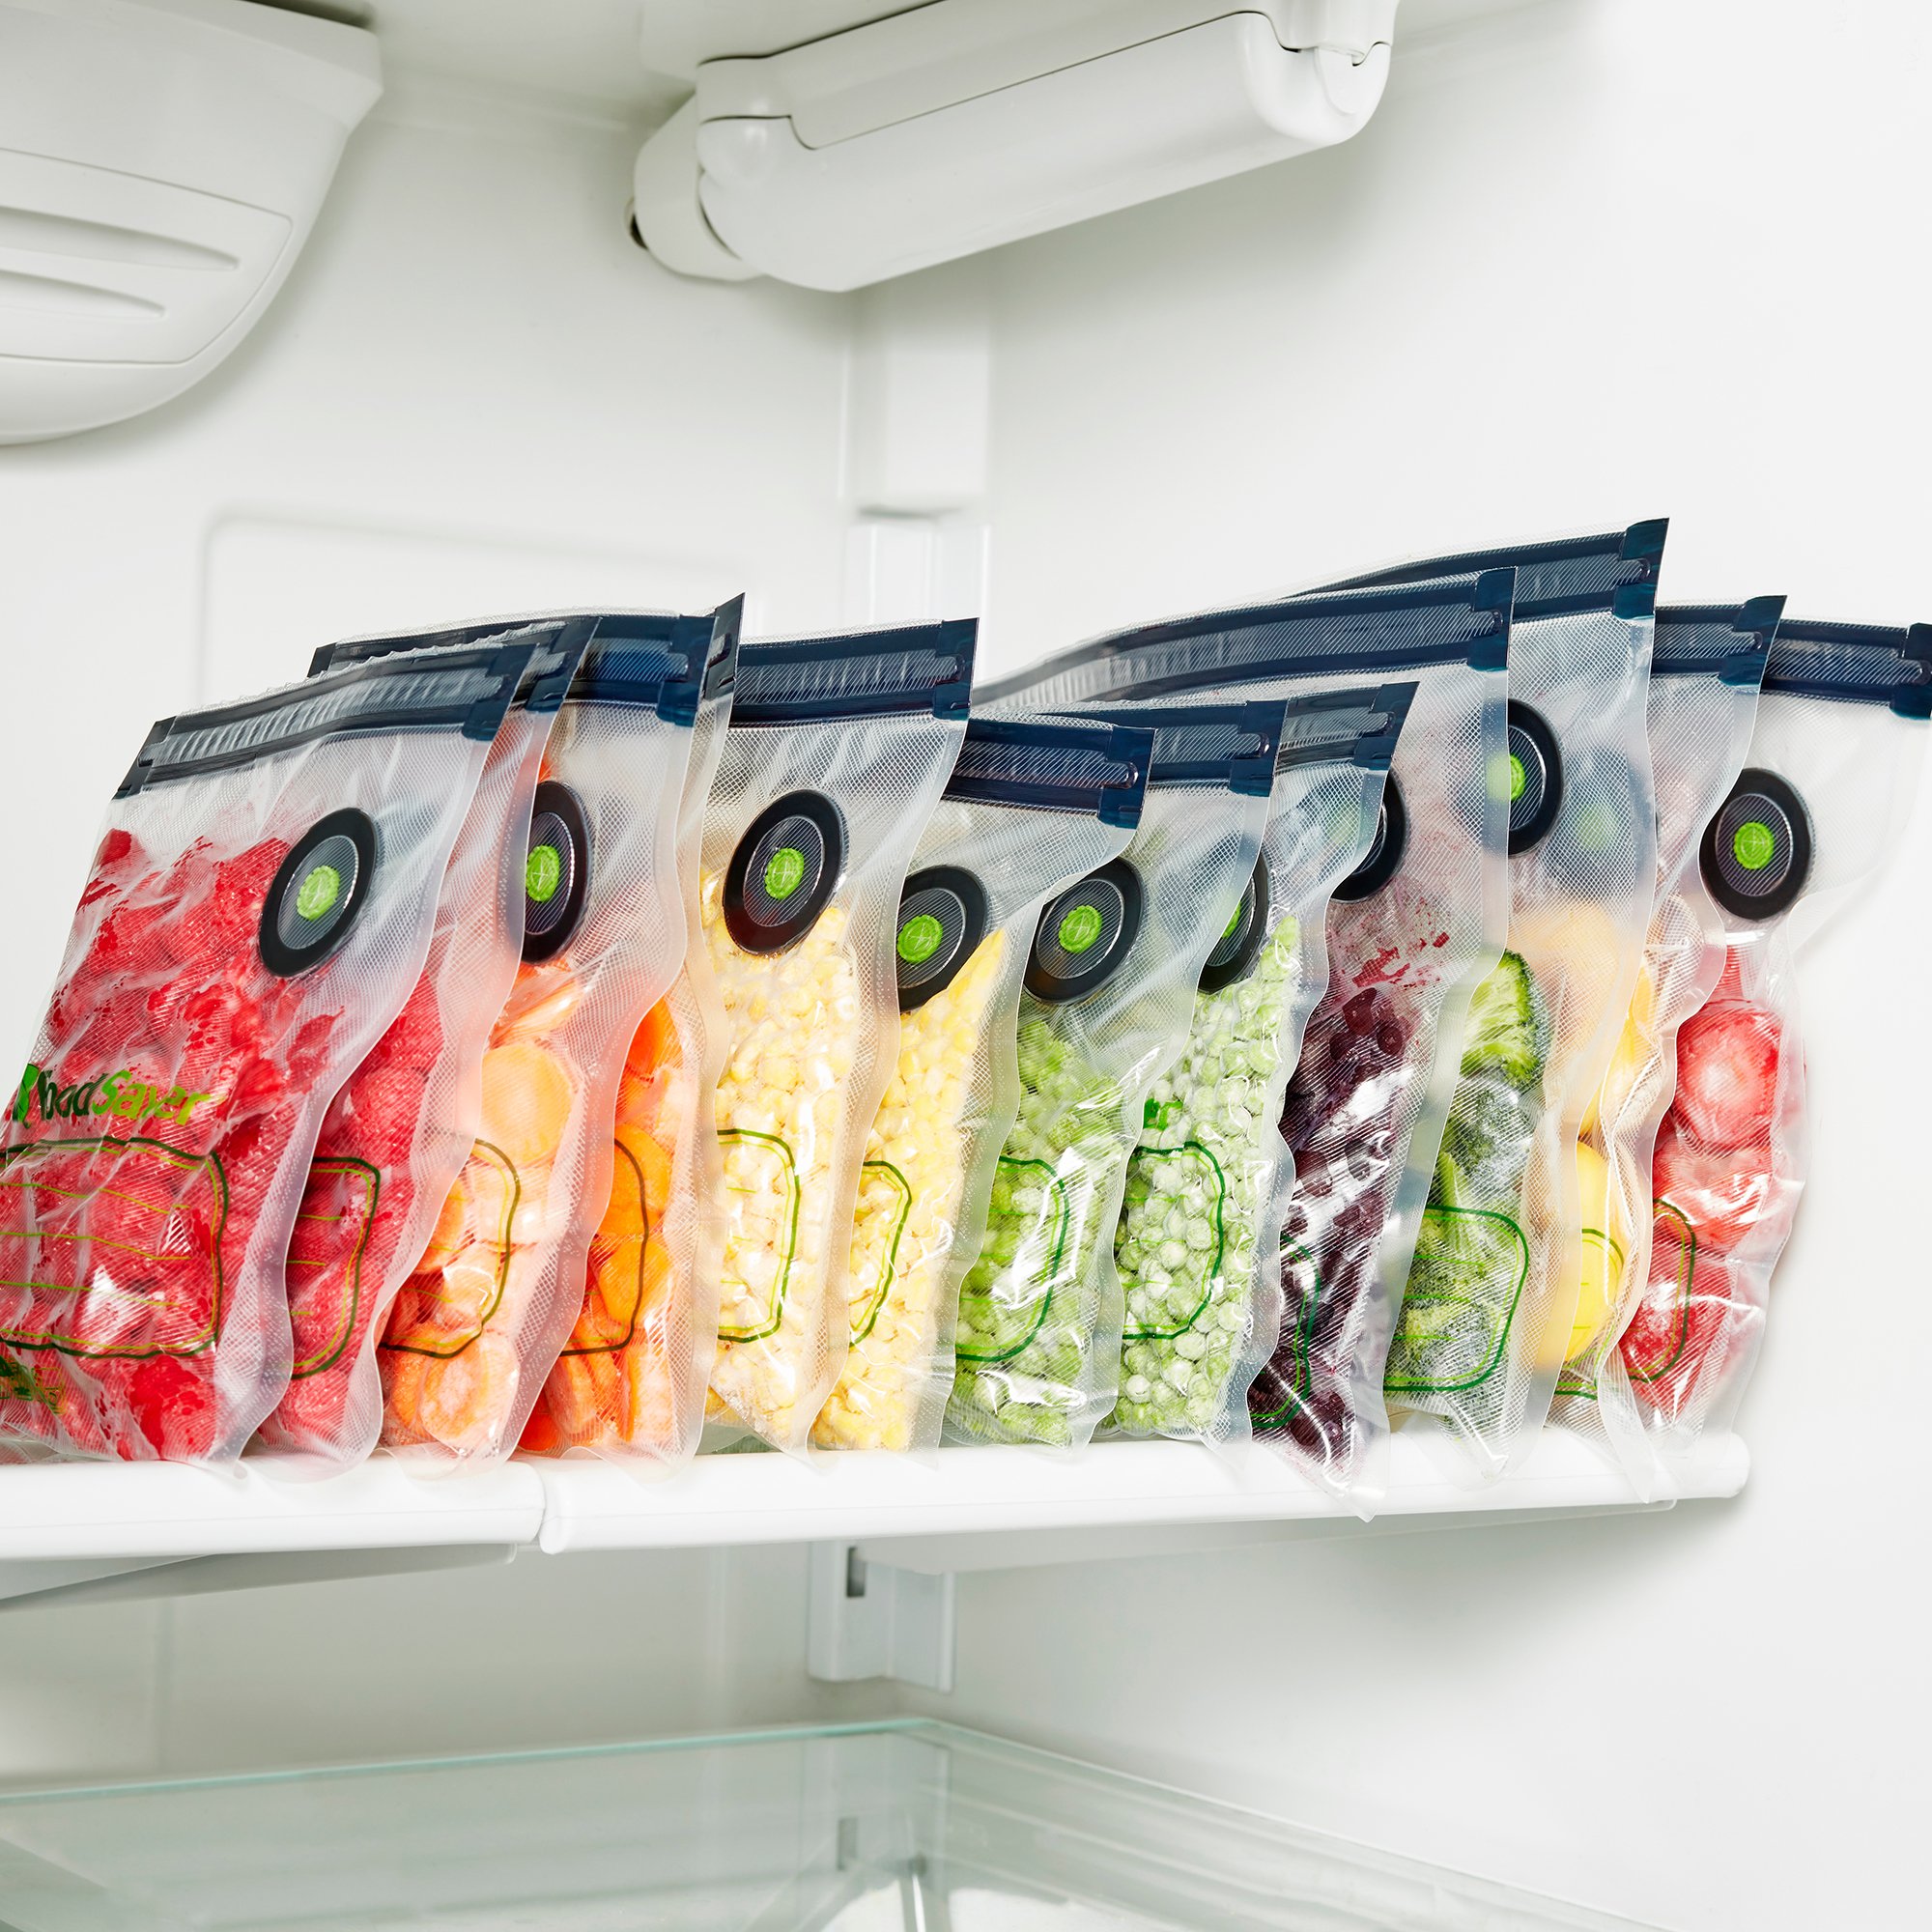 Reusable Quart Freezer Bags - 6 Pack